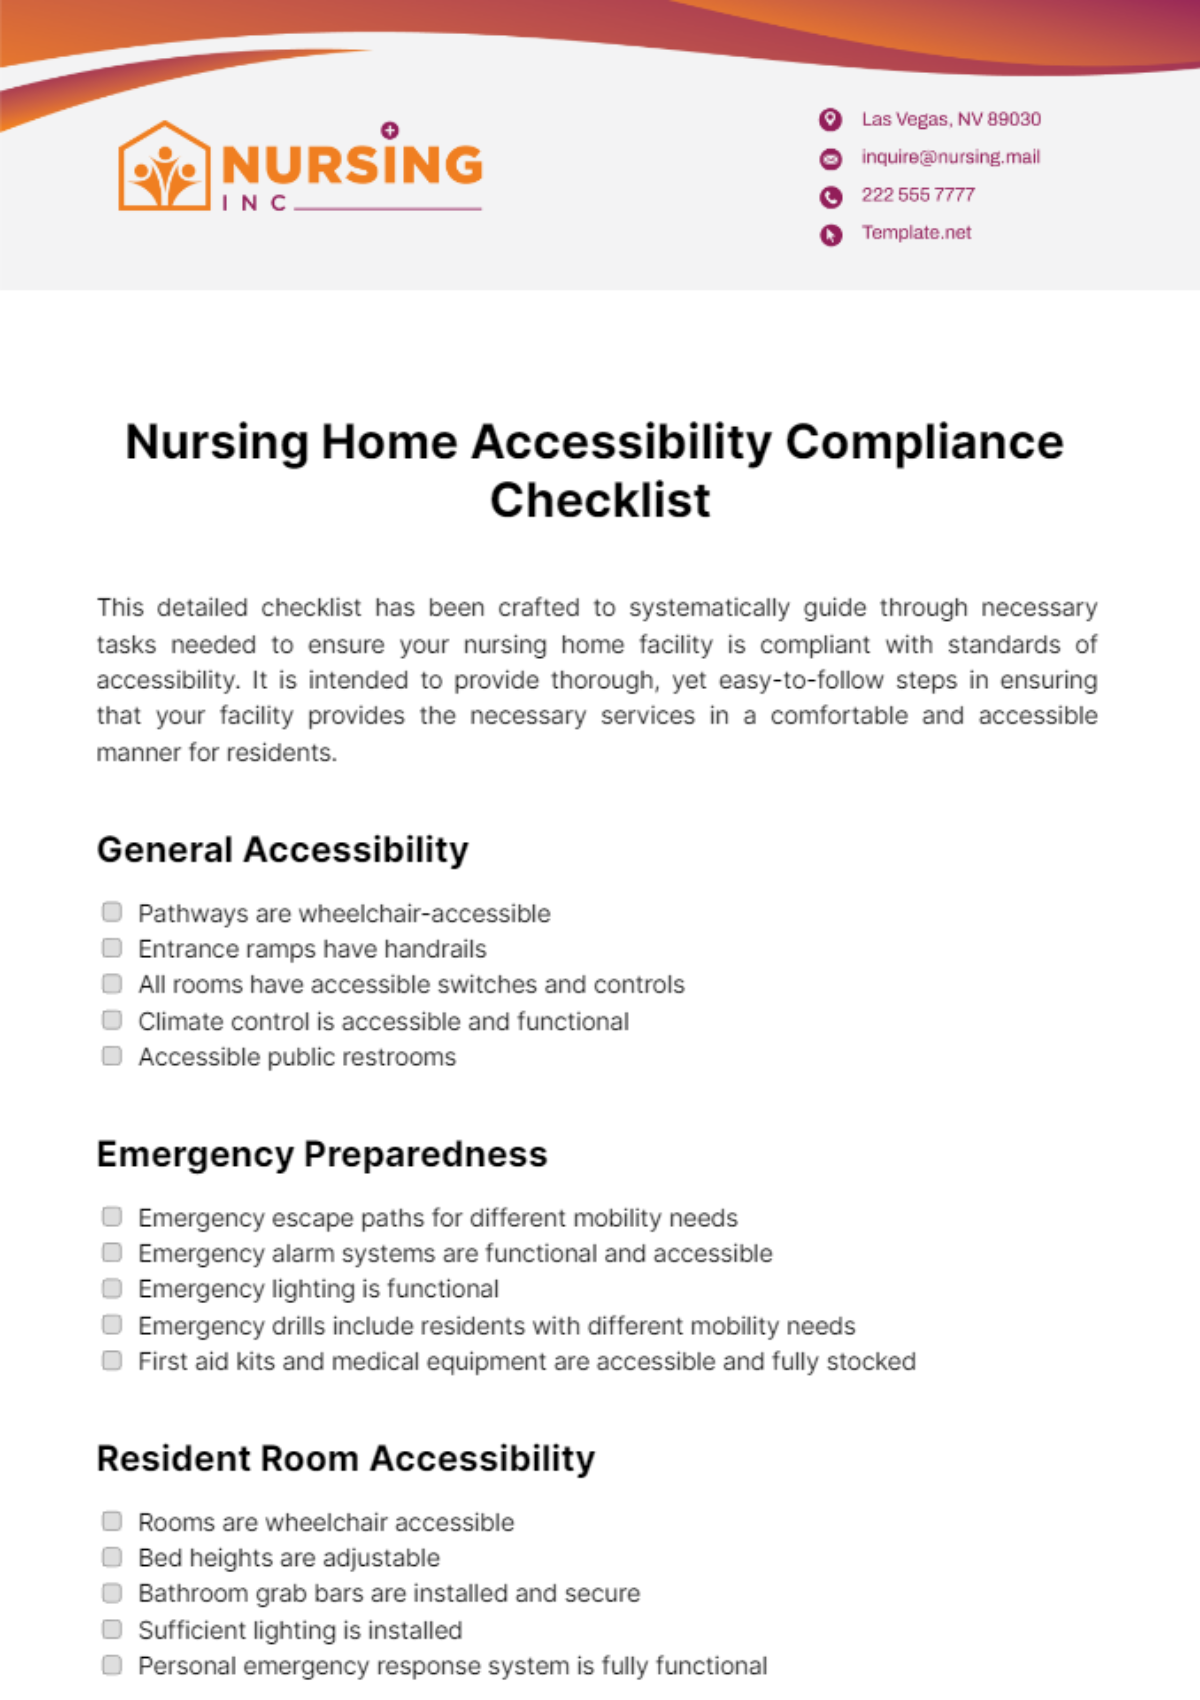 Nursing Home Accessibility Compliance Checklist Template